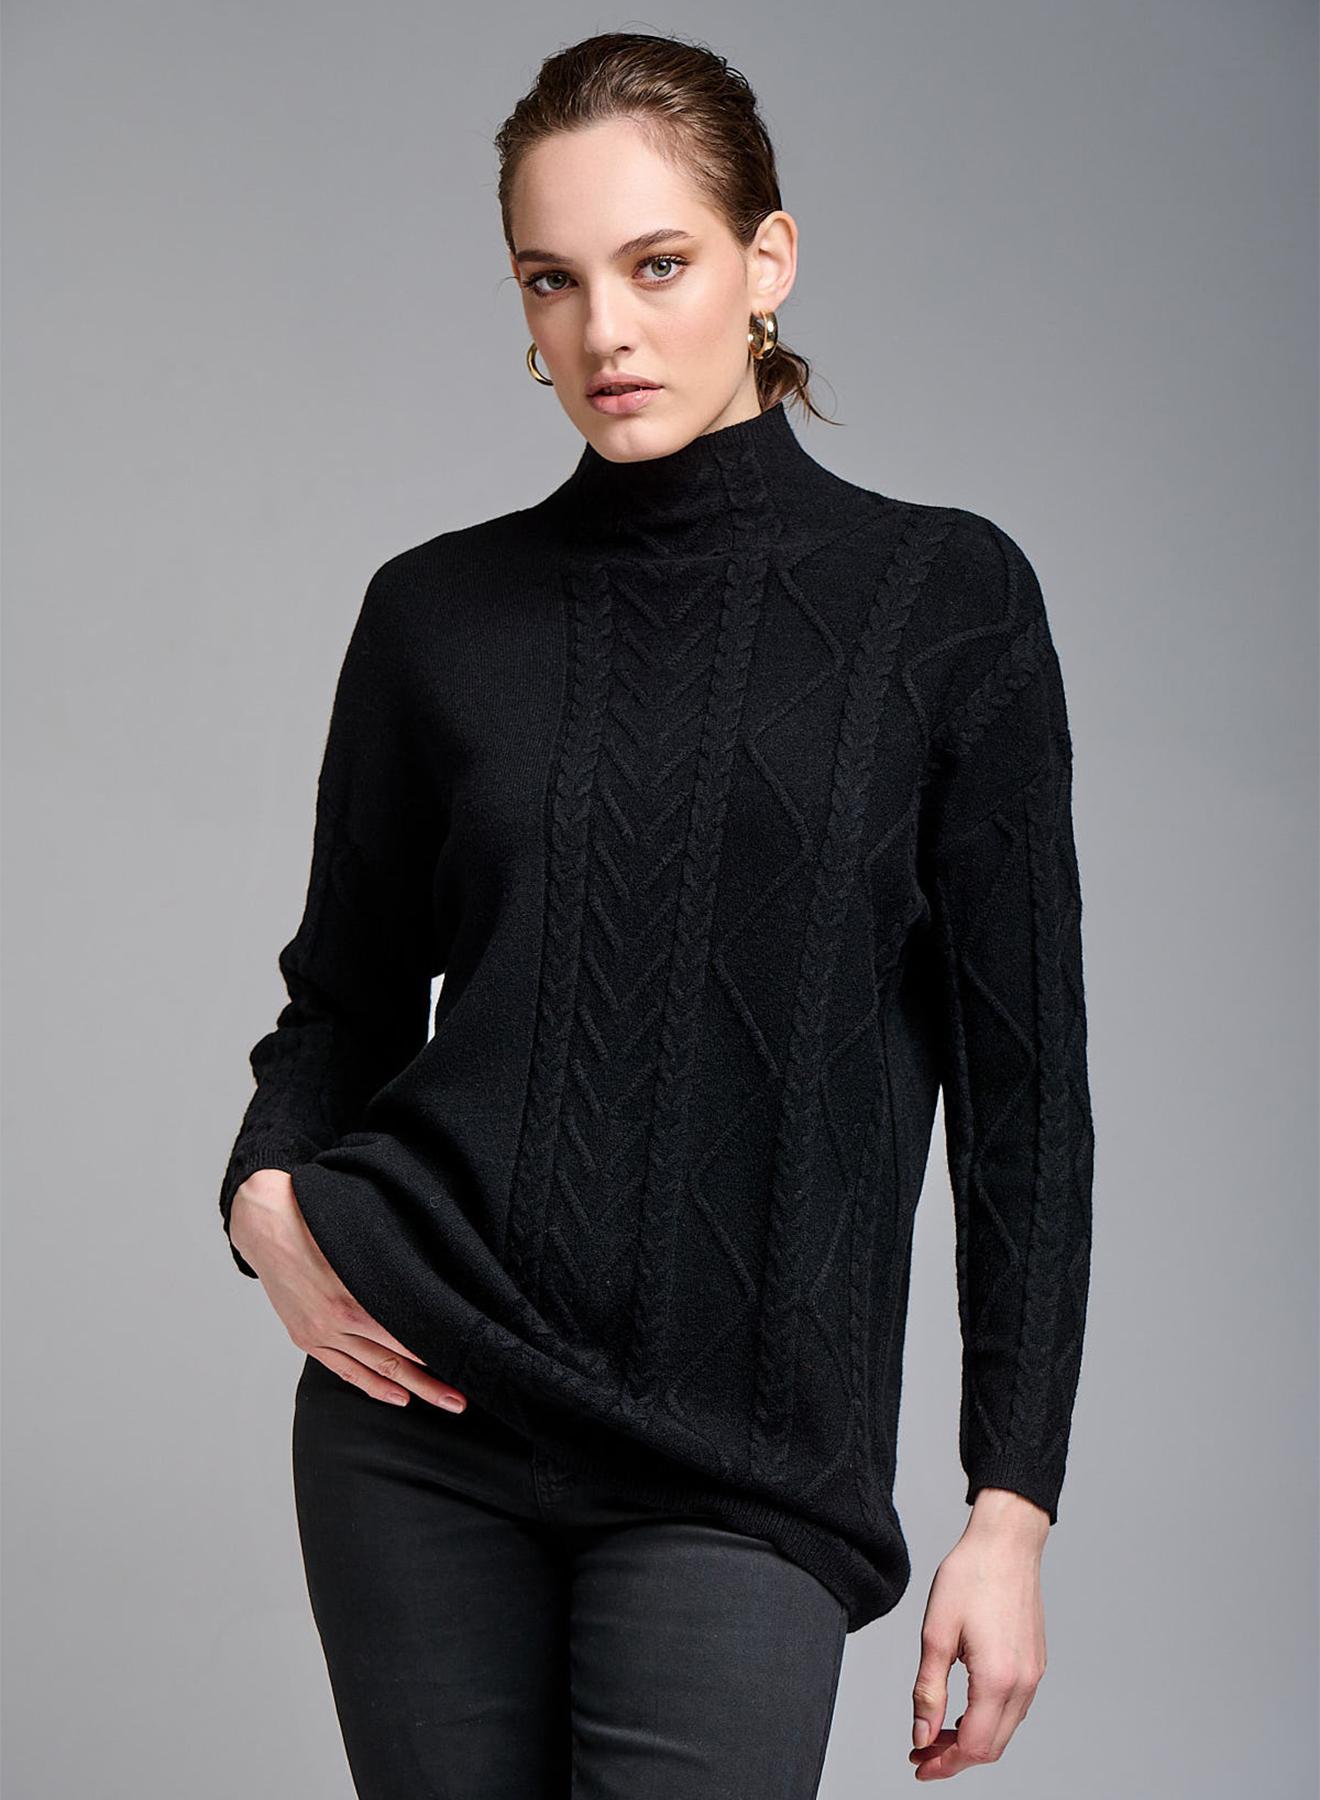 Half-turtleneck sweater with textured details - 4